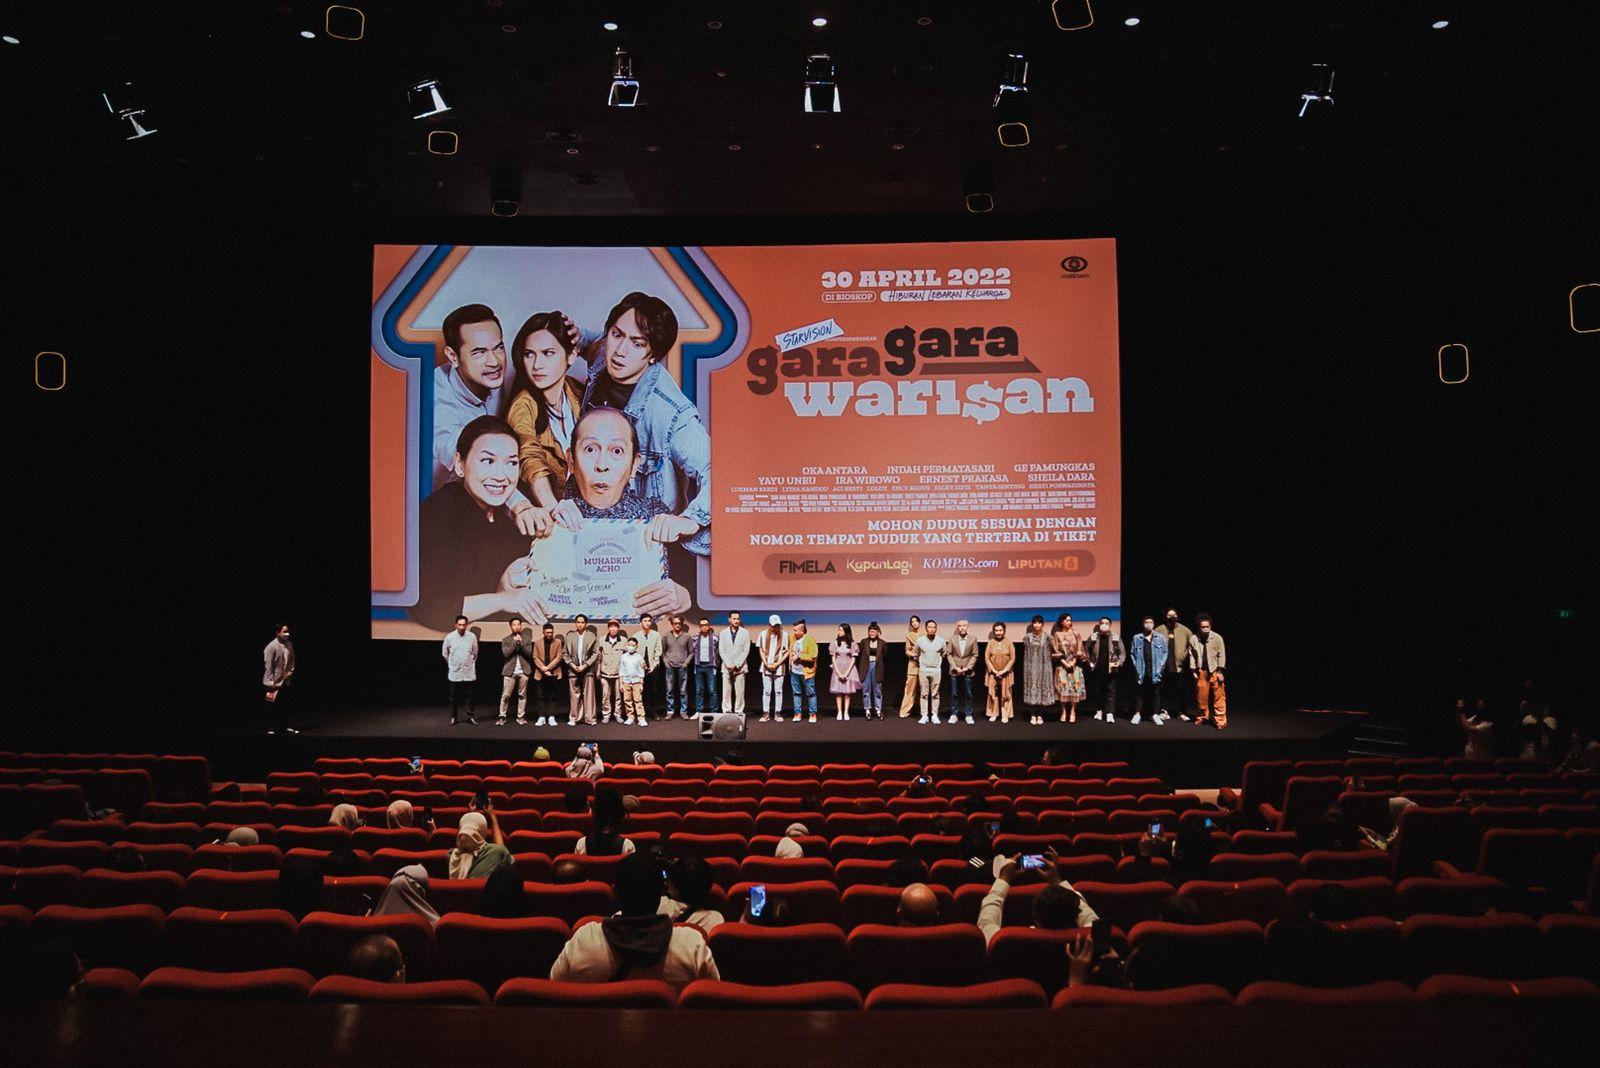 Gara-Gara Warisan Film Perdana Muhadkly Acho, Pesaing Ernest Prakasa di Drama Komedi